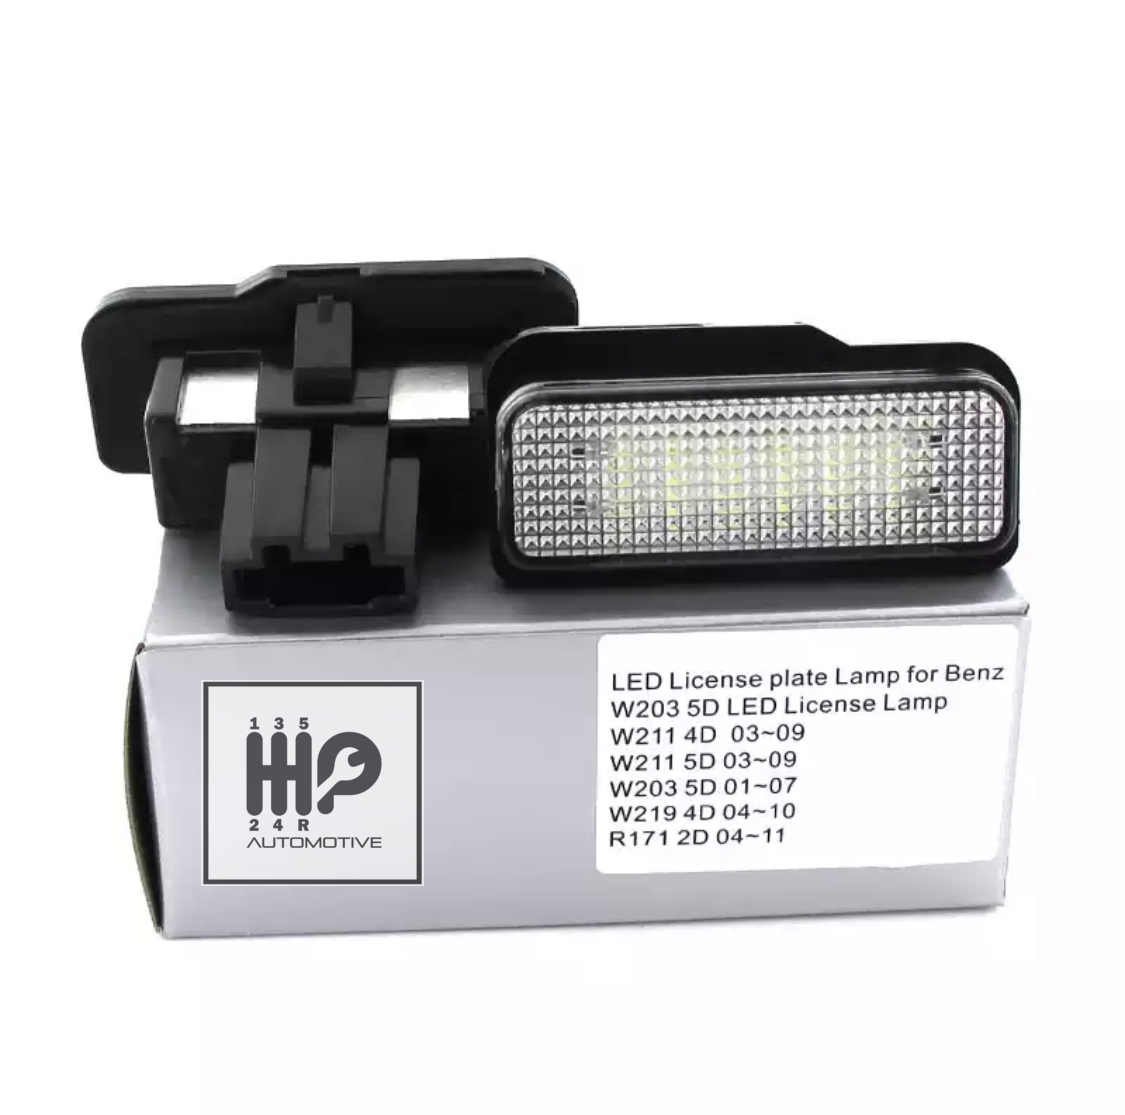 Luz matricula LED mercedes w211 hp automotive